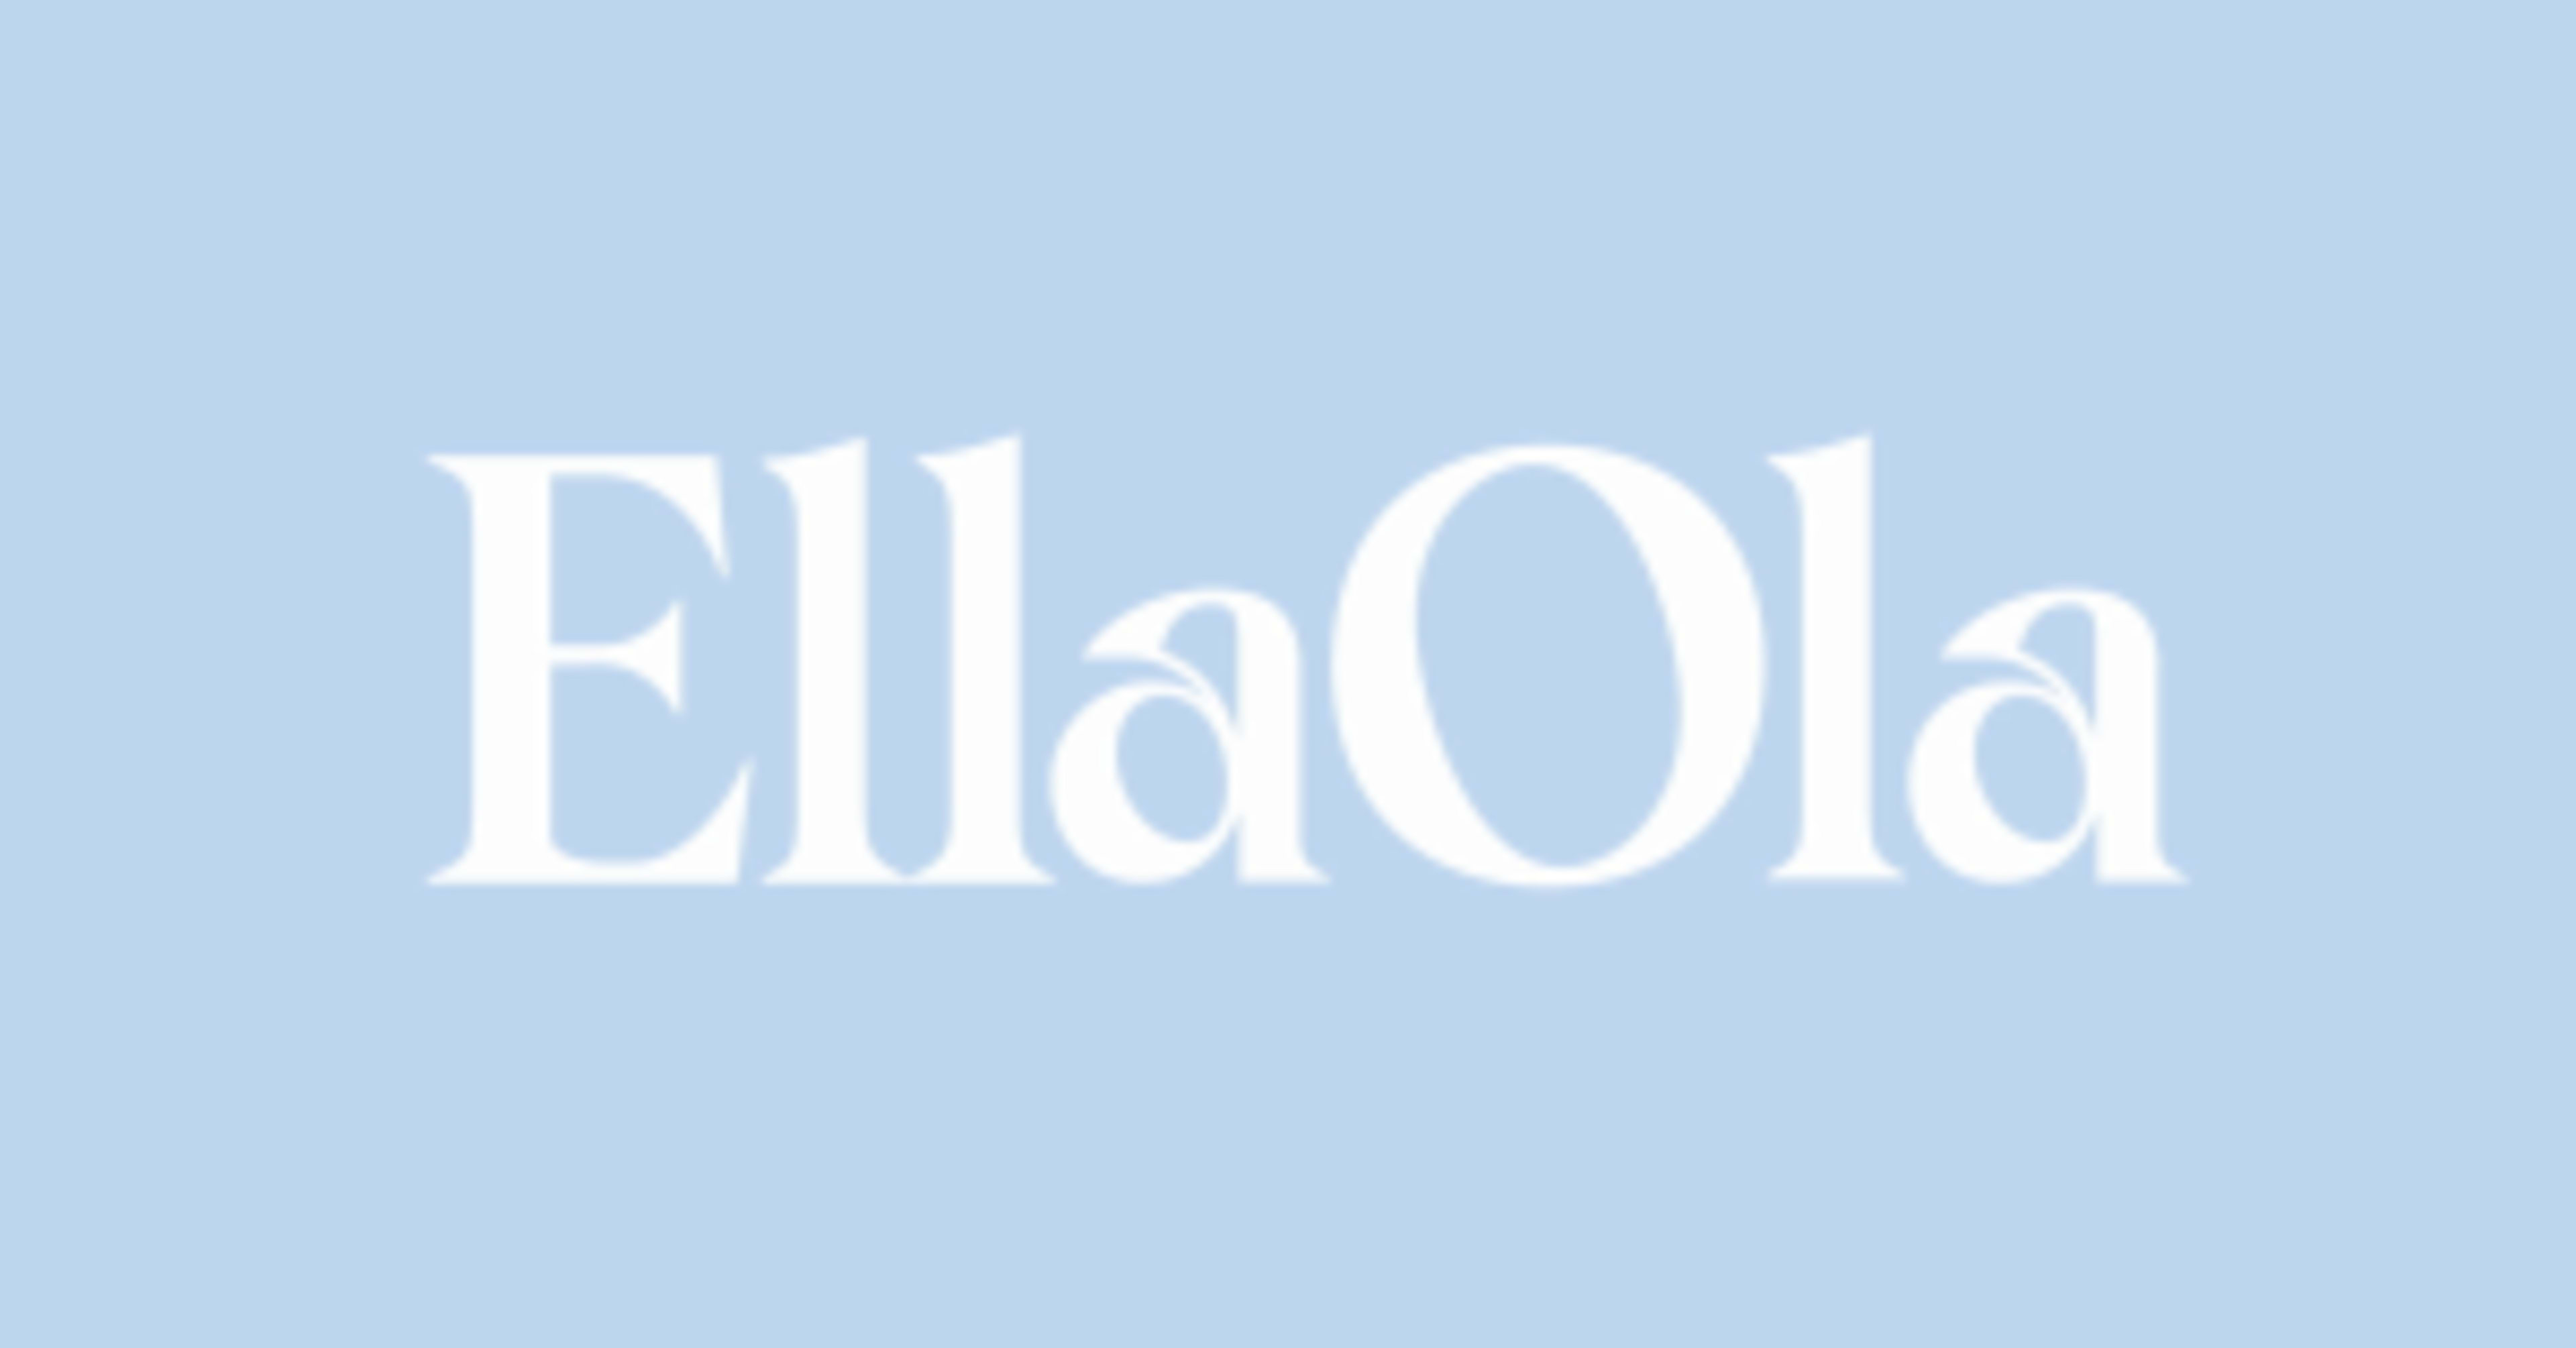 EllaOla Brands . Code